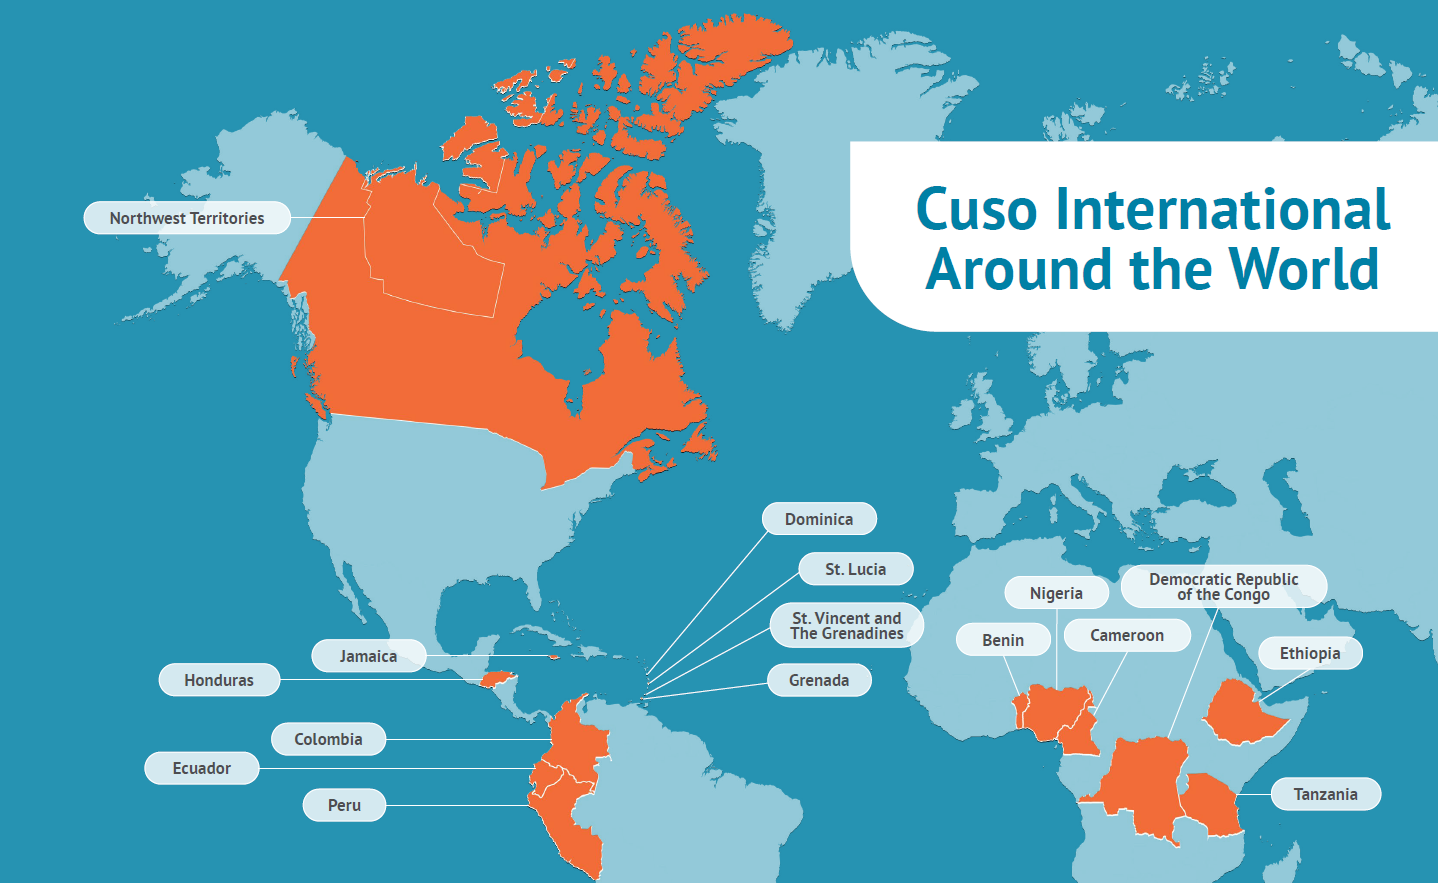 Cuso International Around the World